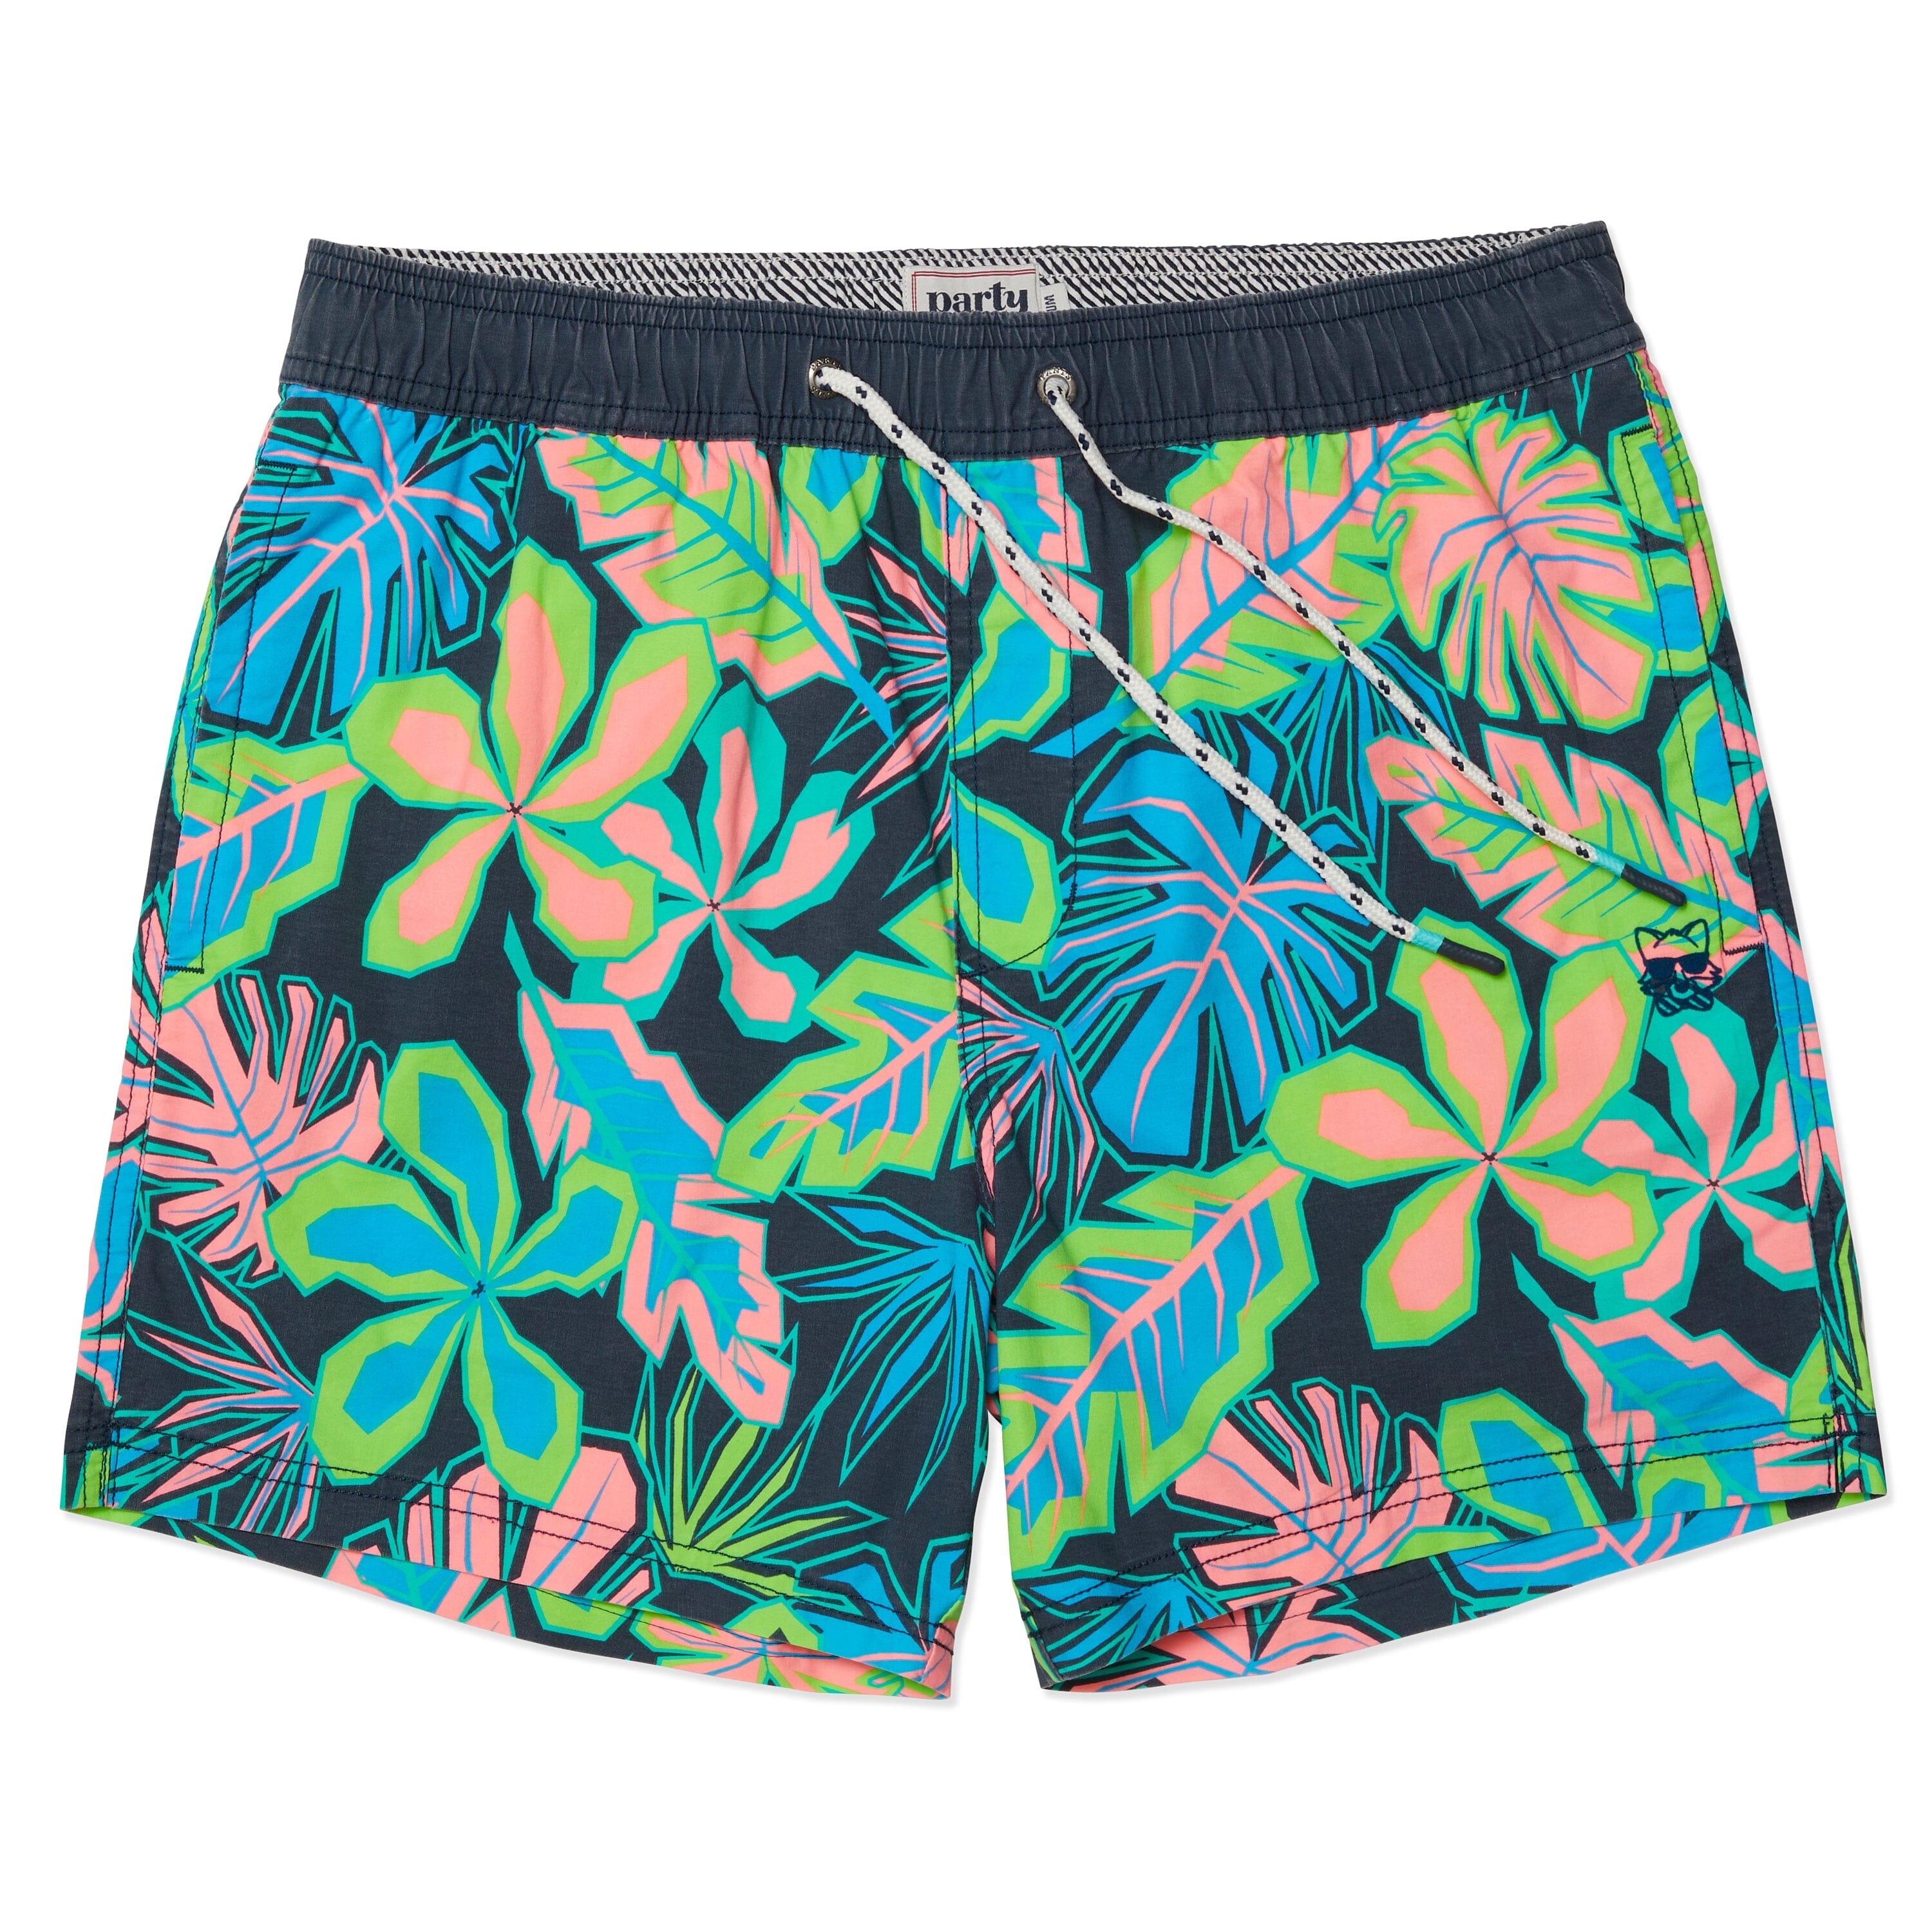 Fun Swim Shorts | Vibrant Beach Apparel | Party Pants